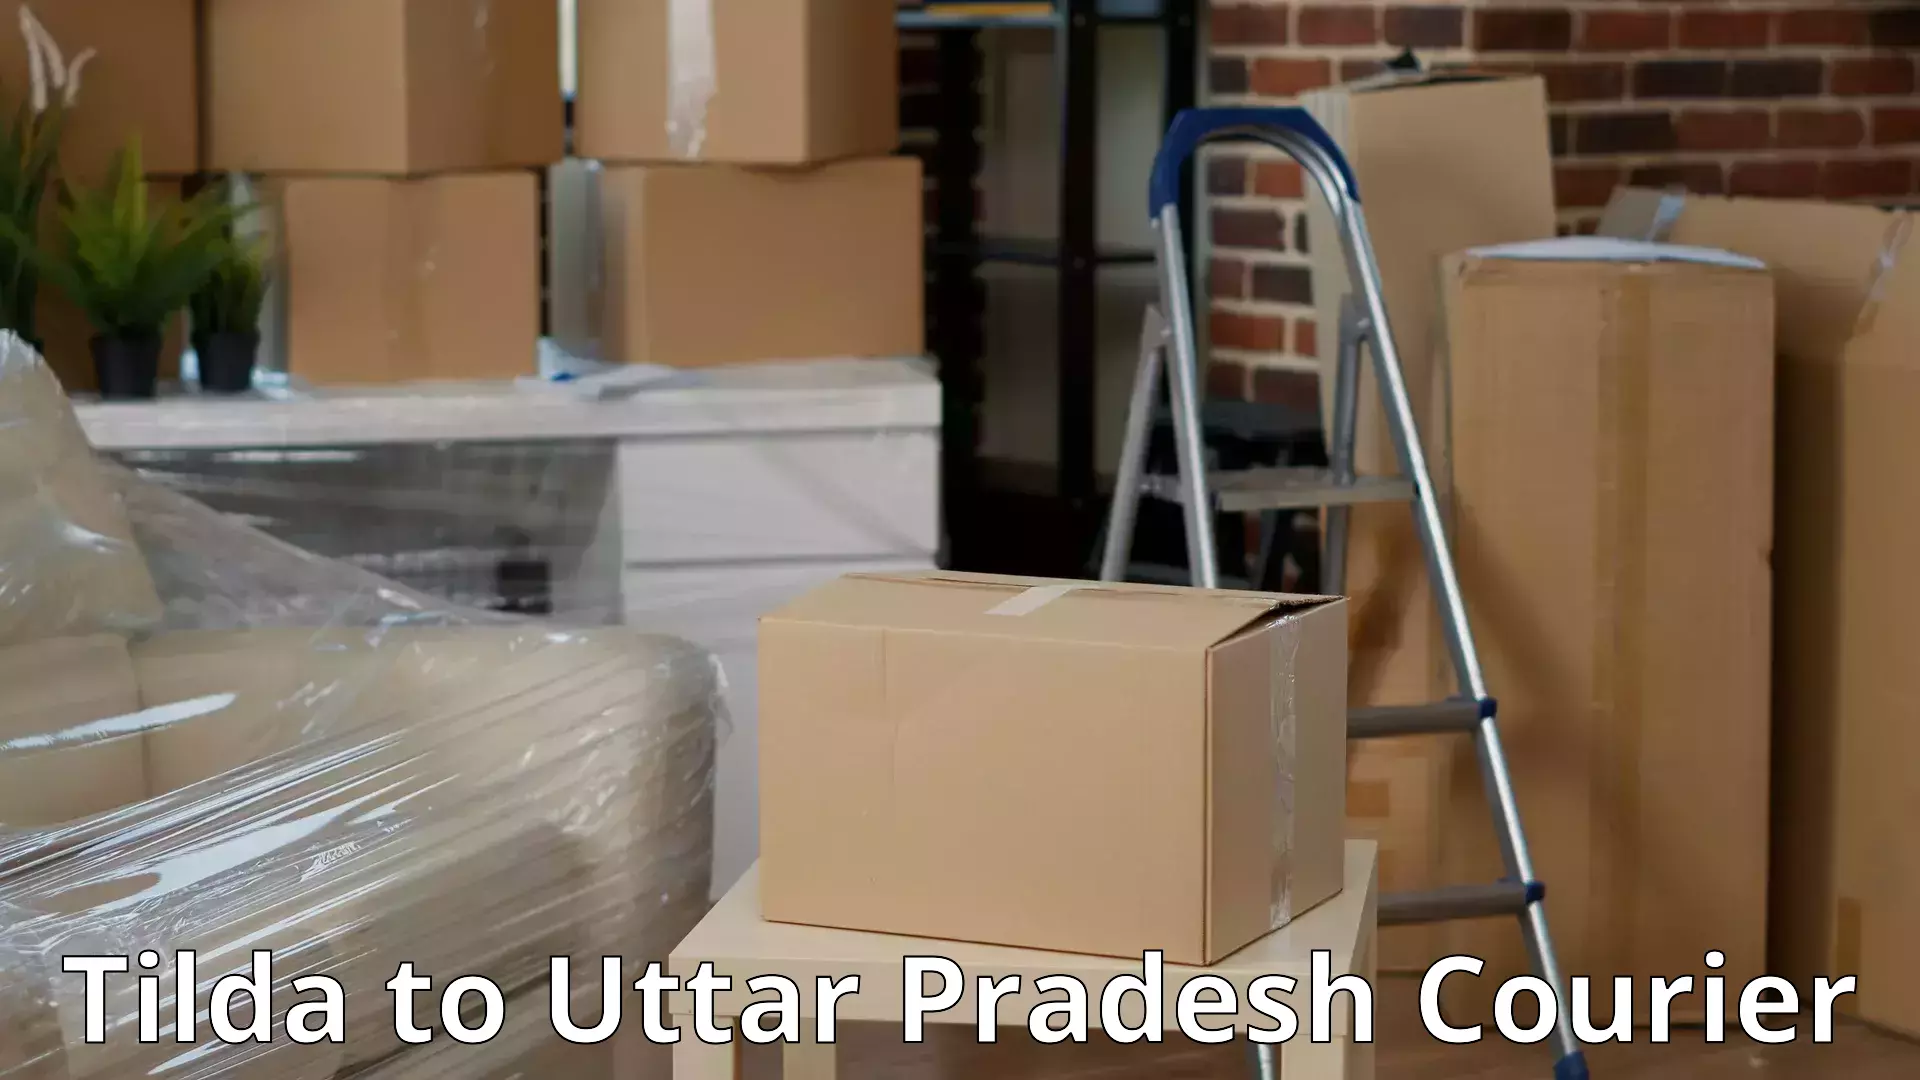 Trusted relocation services Tilda to Uttar Pradesh